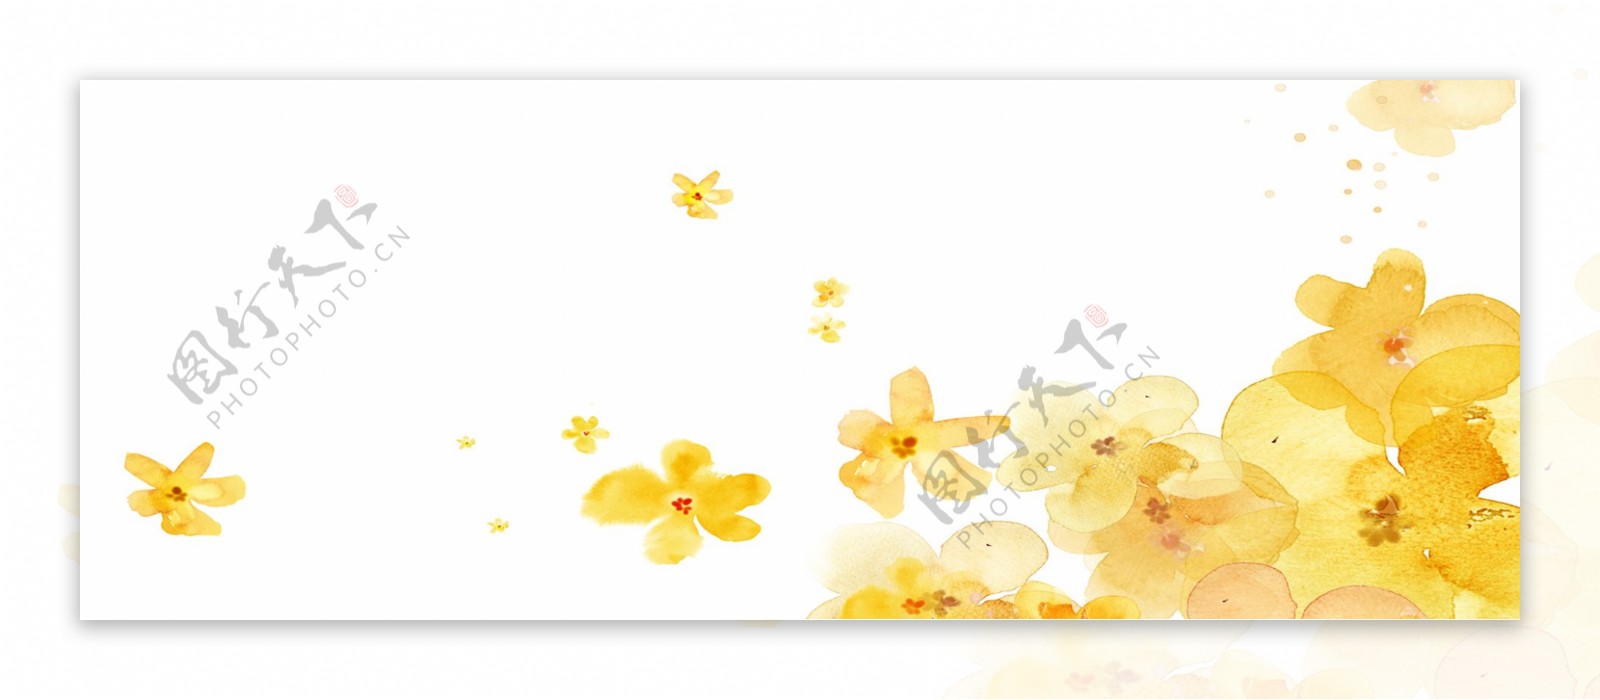 黄色水墨花朵